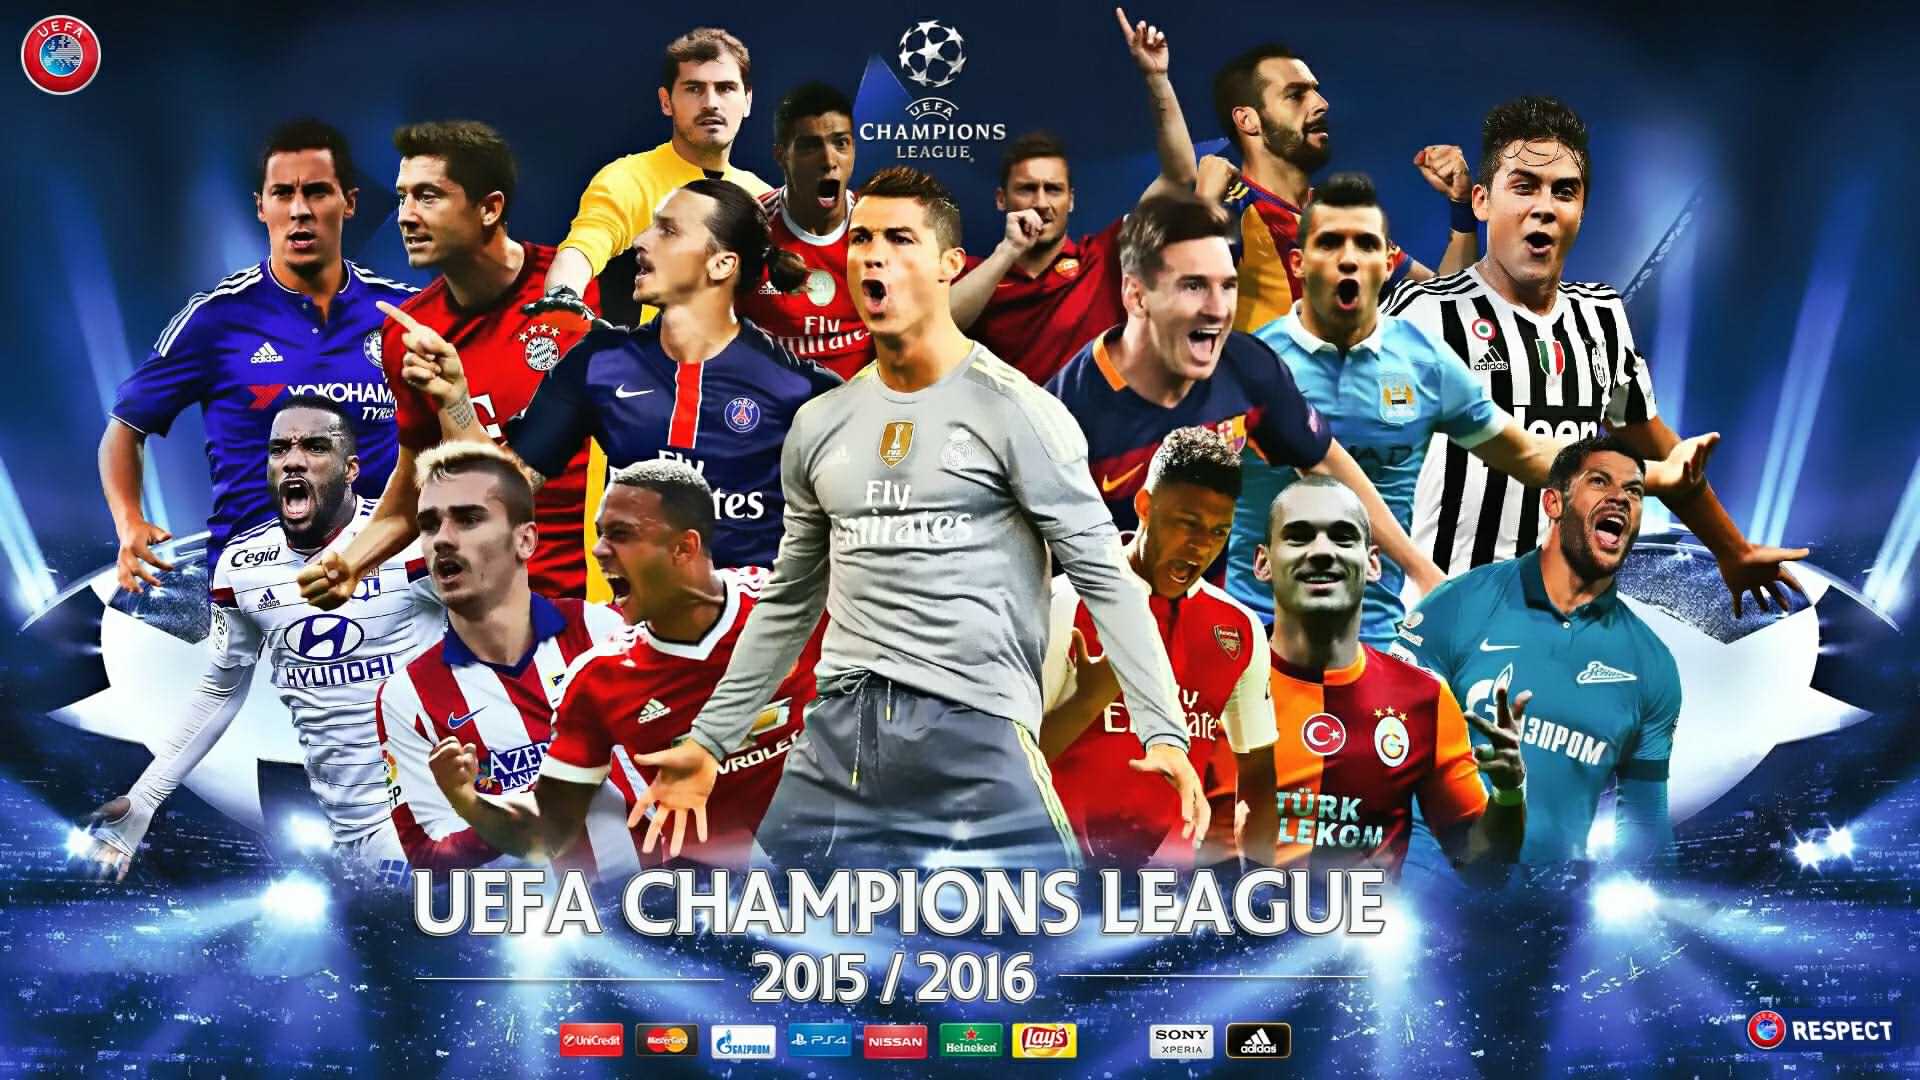 Uefa Champions League 2019 - 1920x1080 Wallpaper - teahub.io